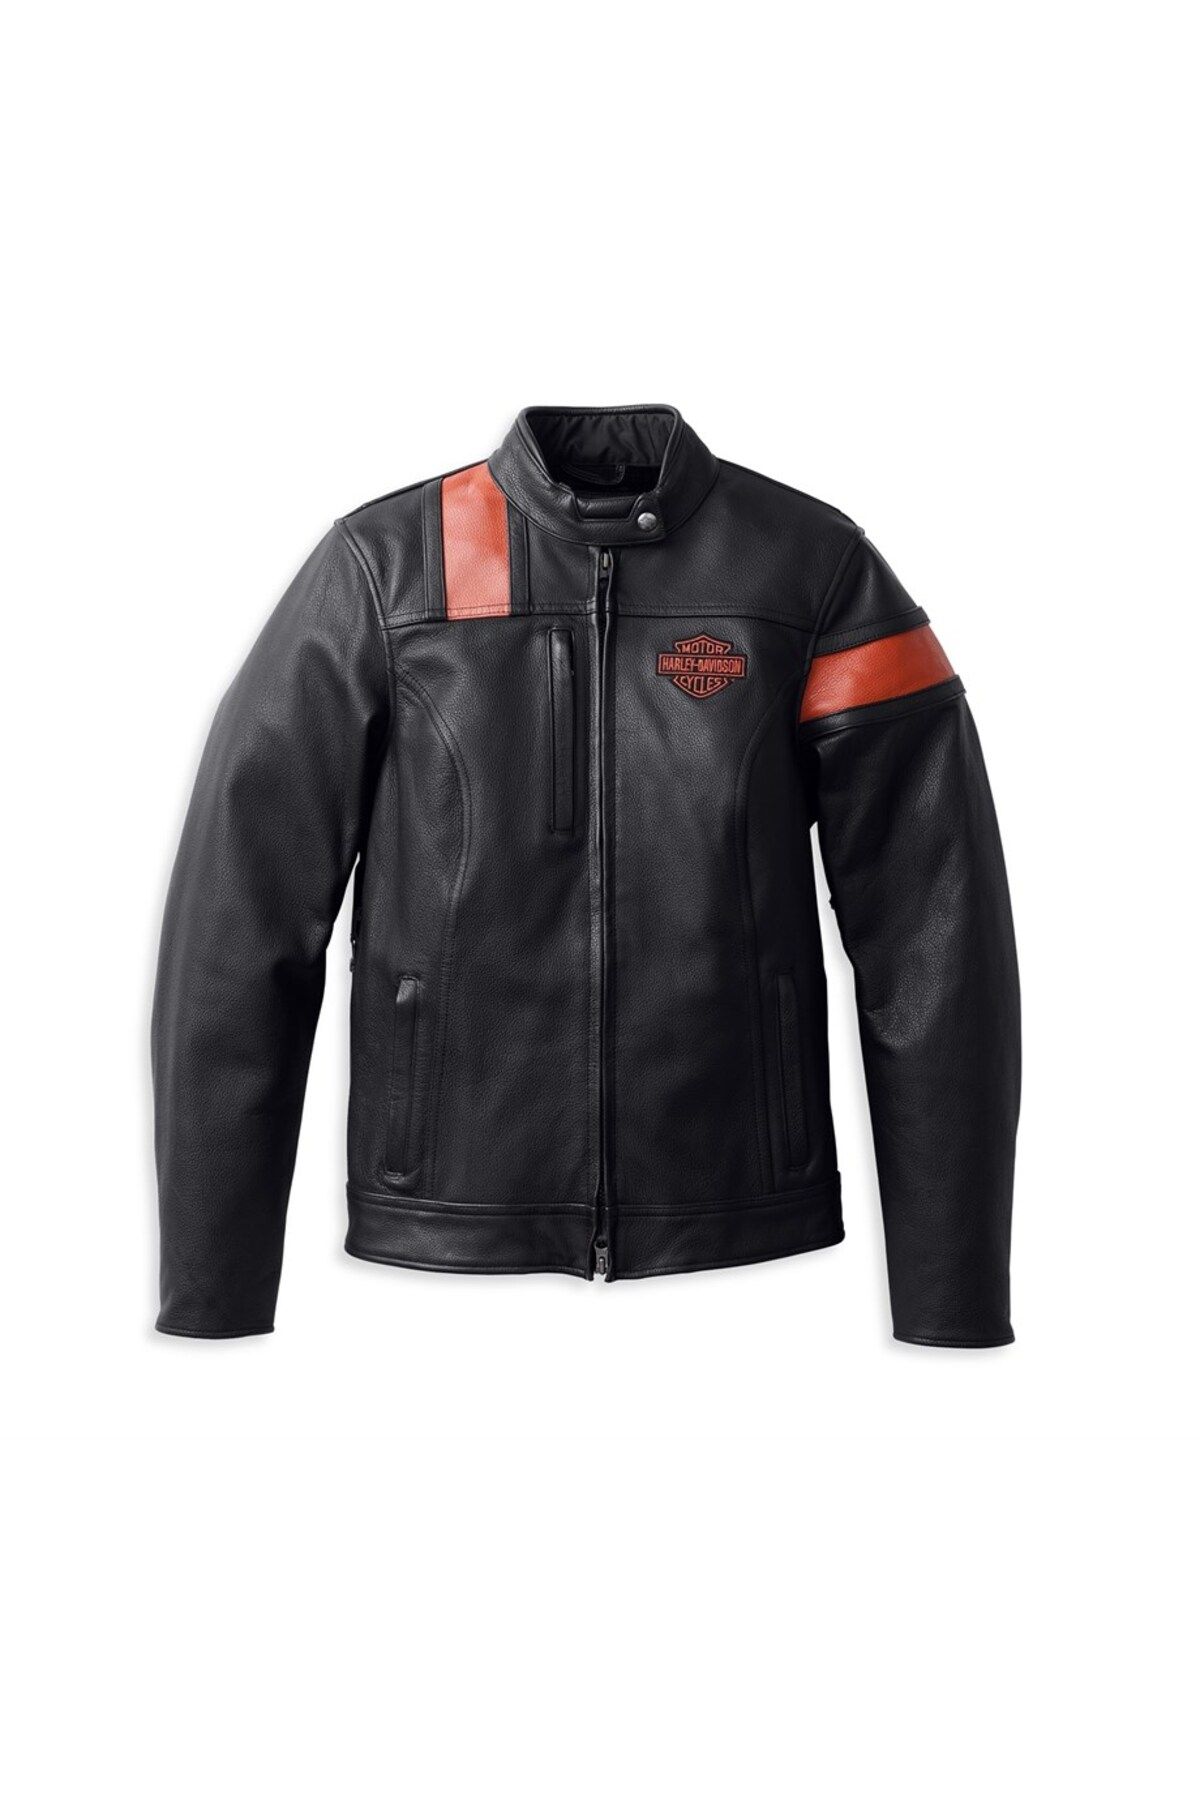 Harley Davidson Harley-davidson Women's Hwy-100 Waterproof Leather Jacket